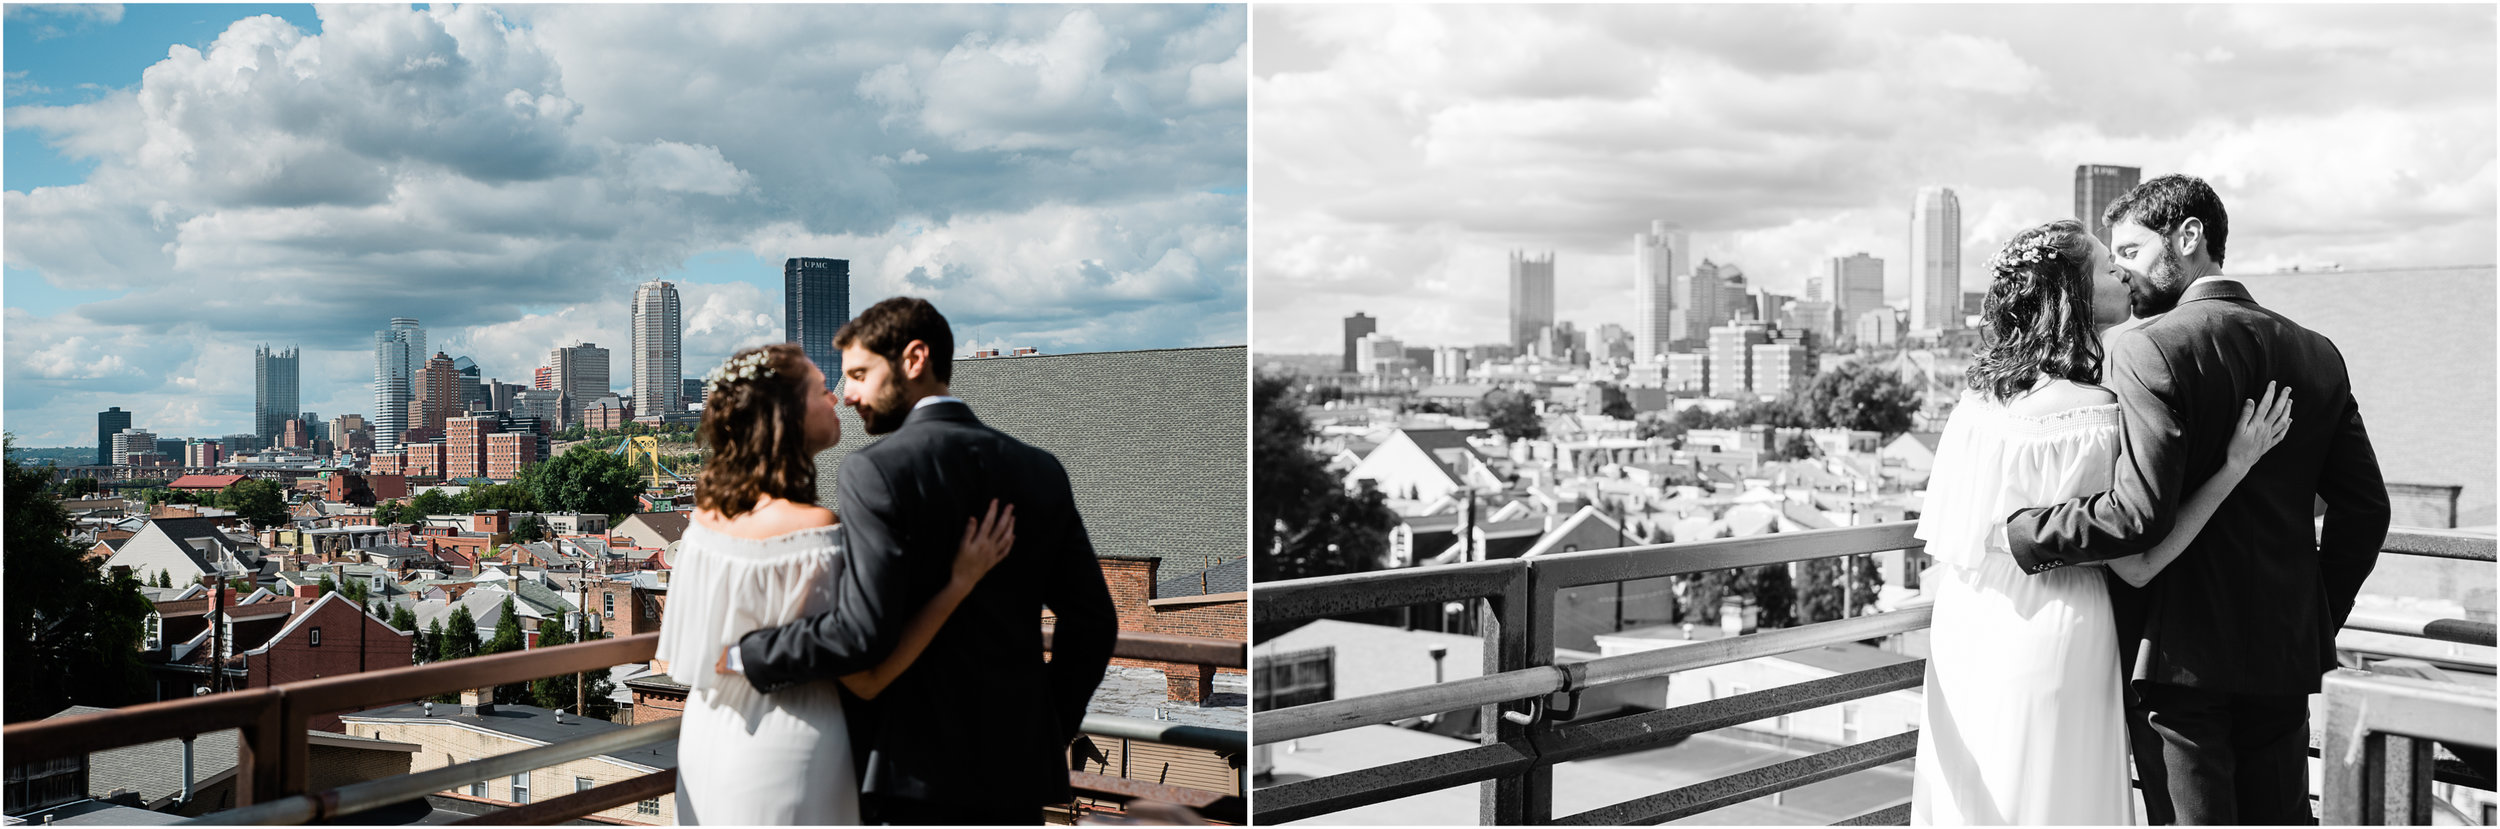 Pittsburgh skyline, Pittsburgh wedding photographer, wedding photography.jpg